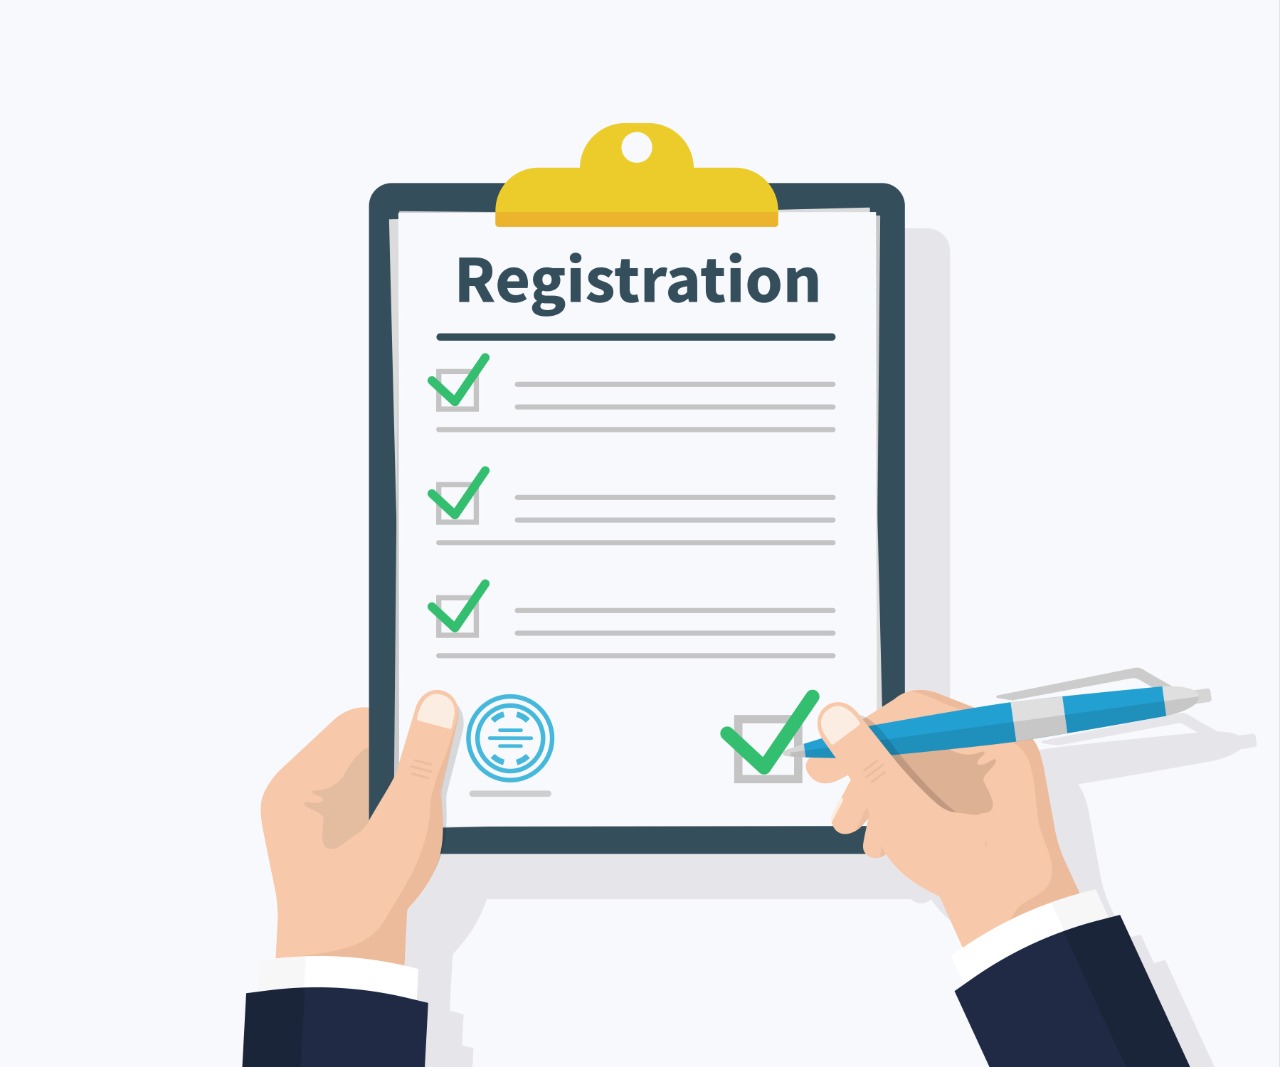 Business Registrations